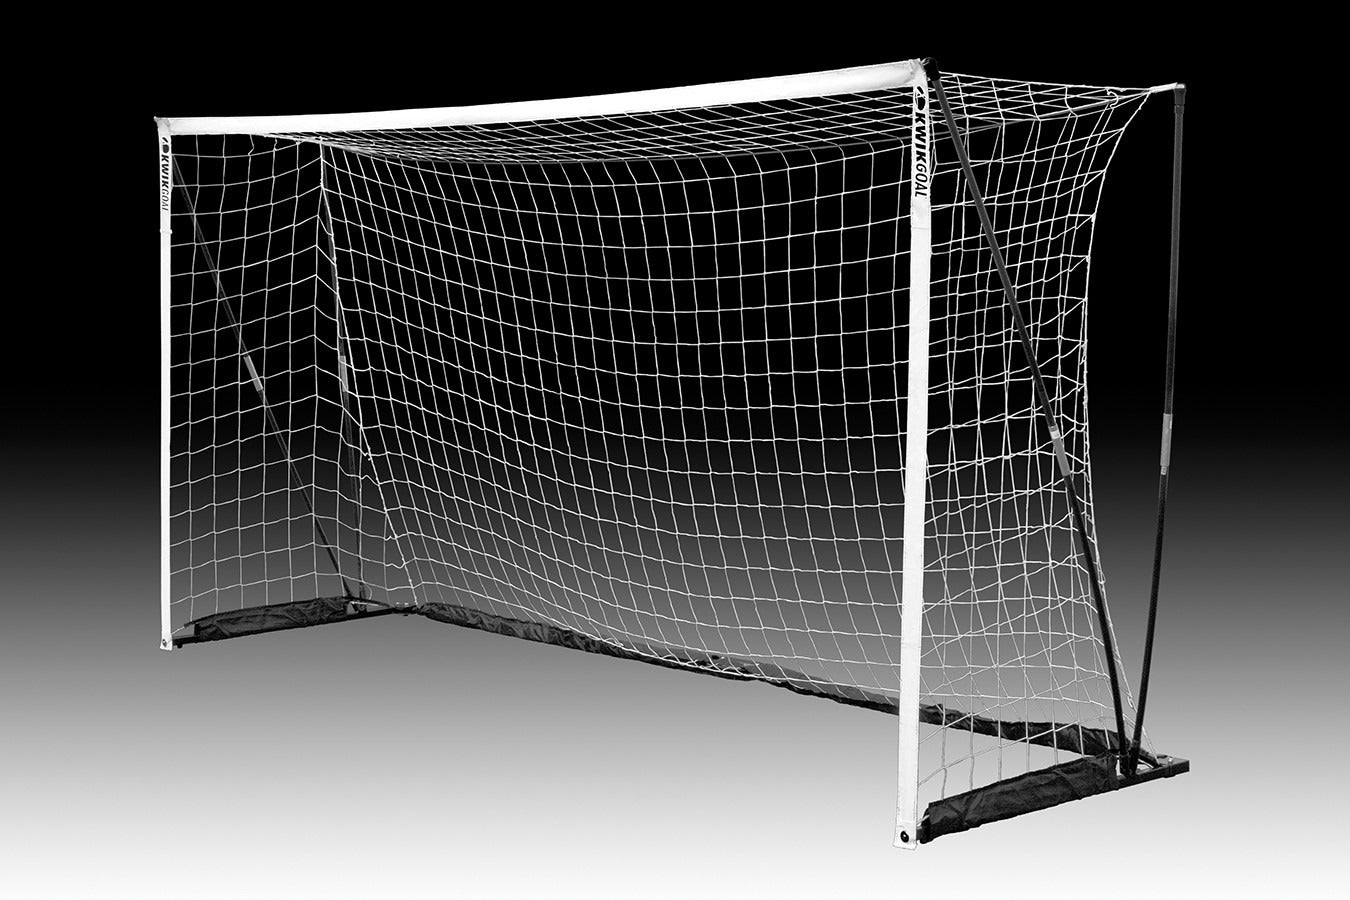 Kwik Flex Soccer Goal 6 1/2 x 12